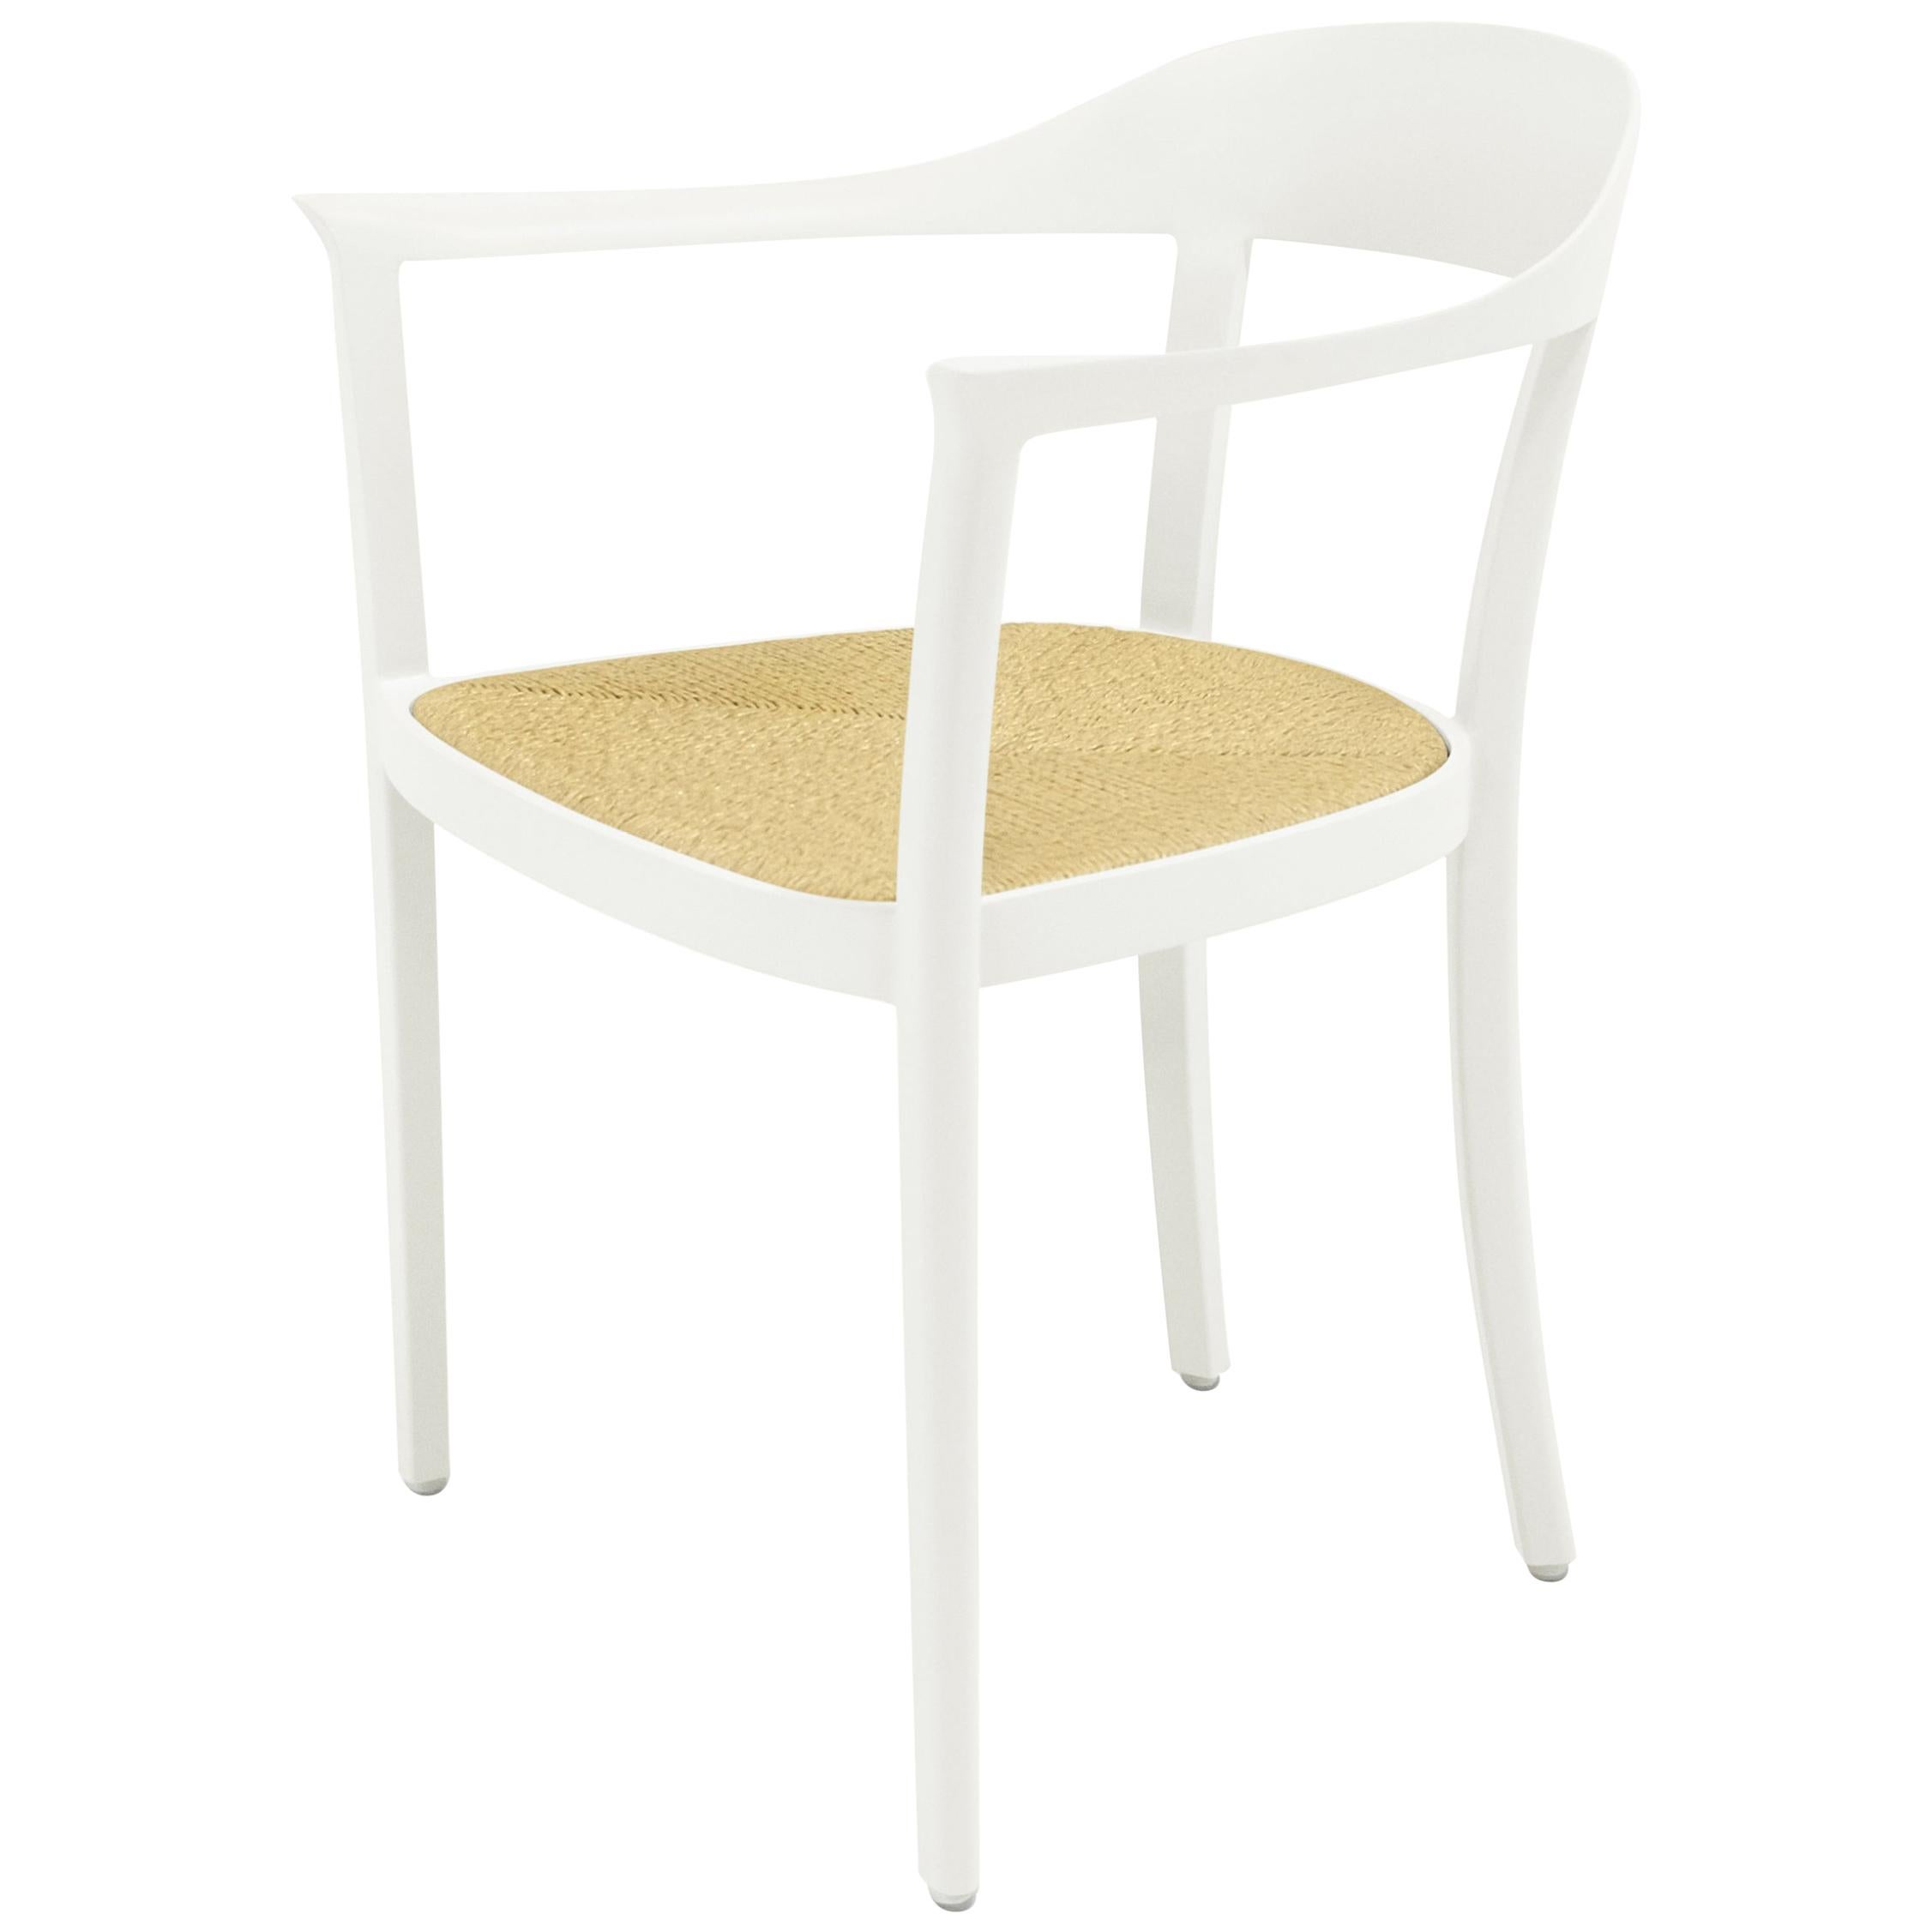 Chesapeake Dining Chair, Classic White, Woven Rush, Outdoor Garden Furniture